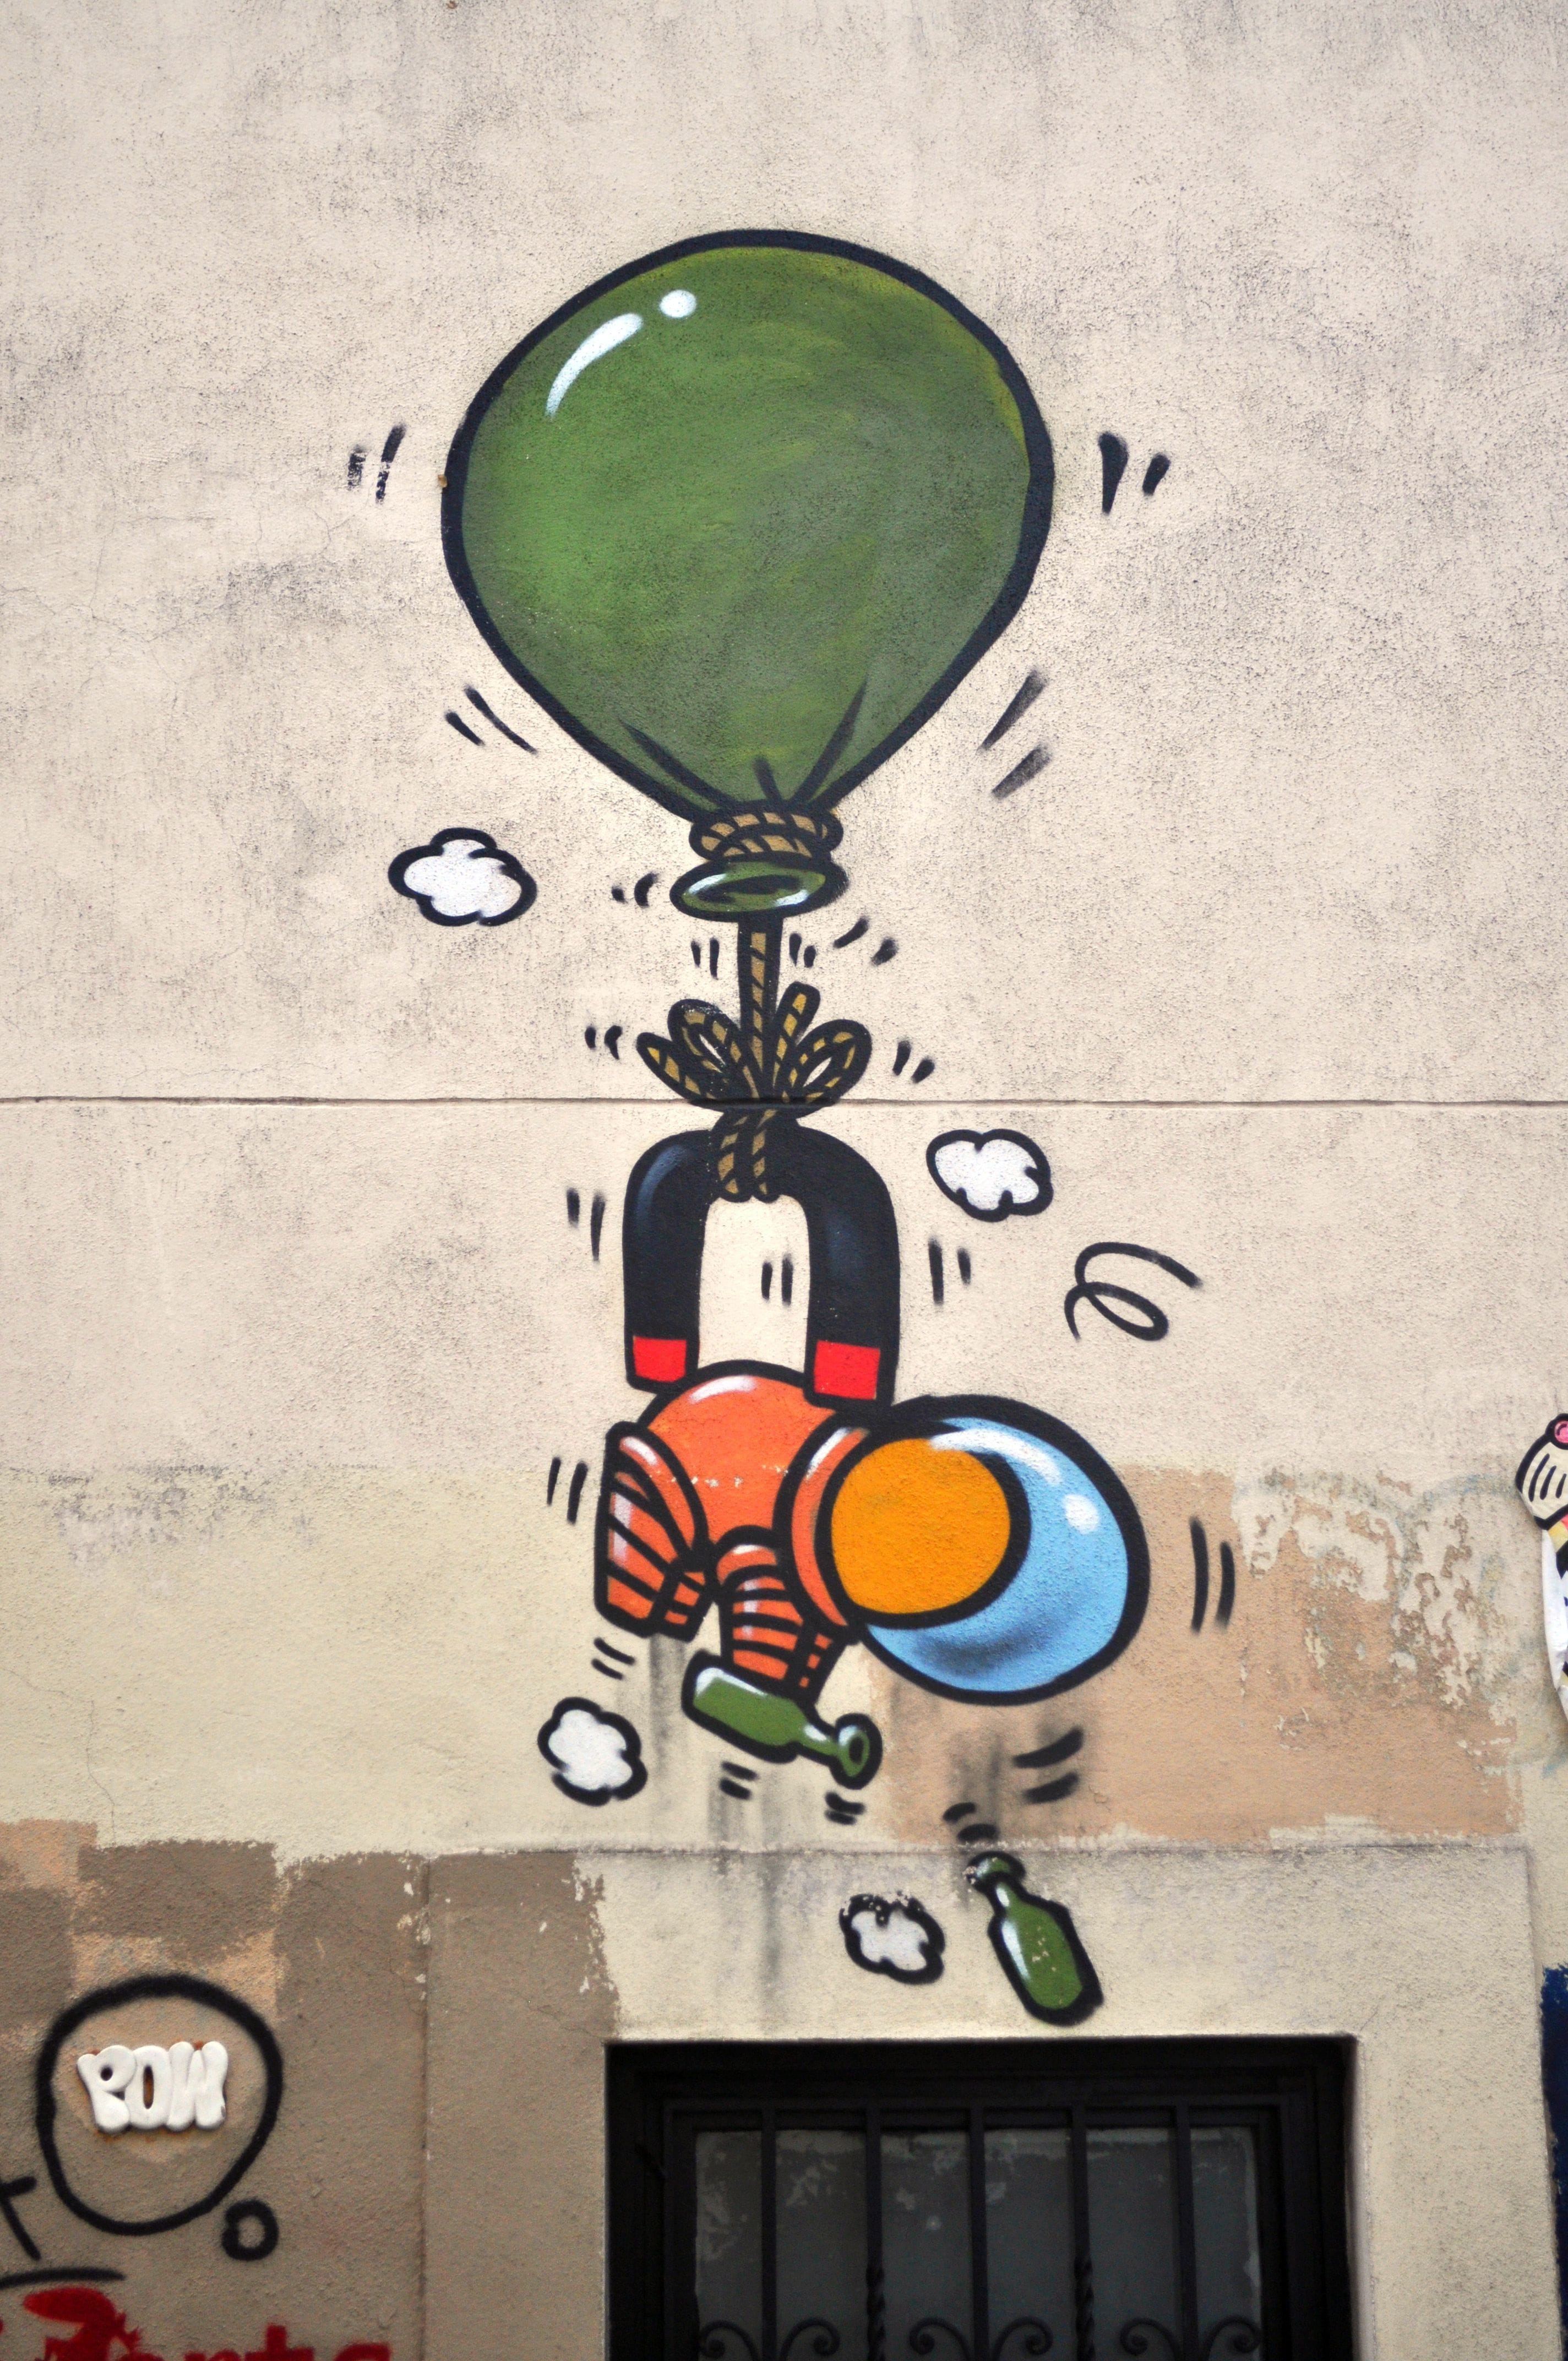 Graffiti 4542  by the artist Jace captured by elettrotajik in Paris France